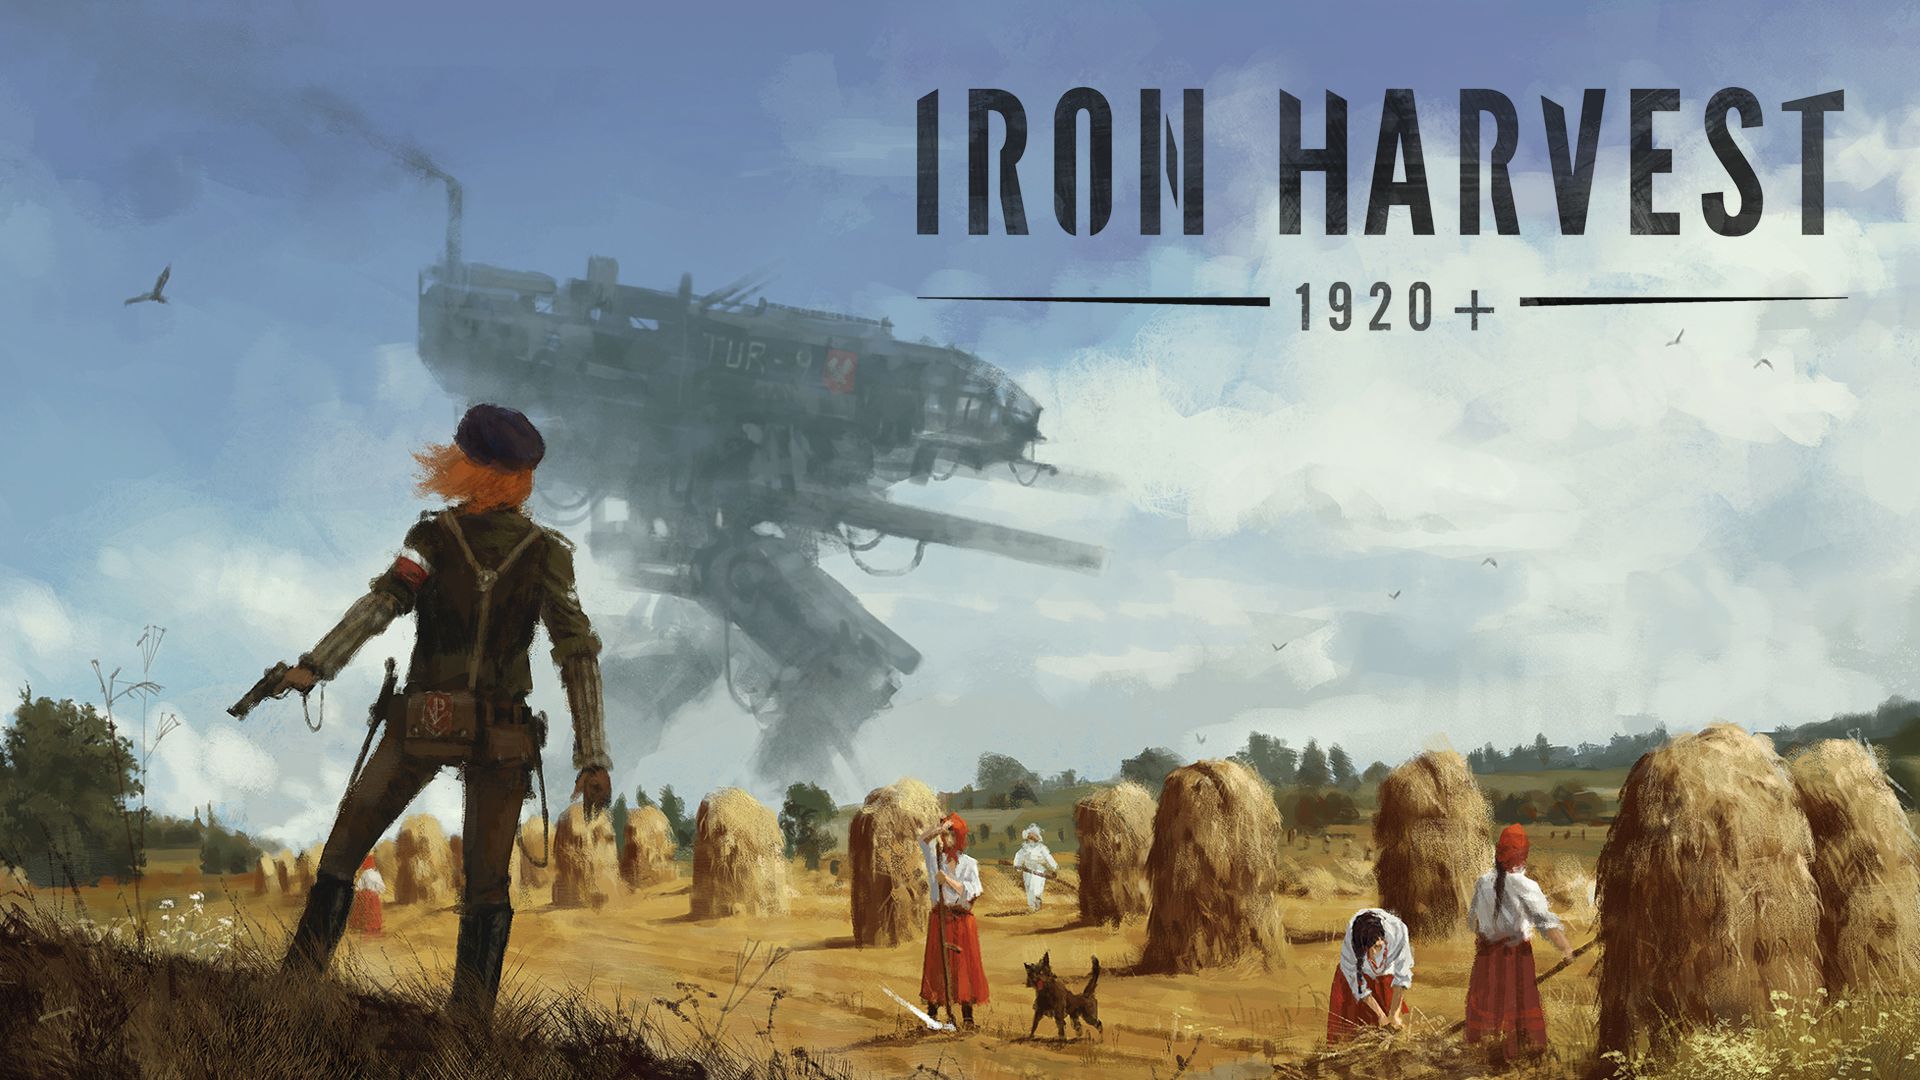 Iron Harvest 1920+ Principal